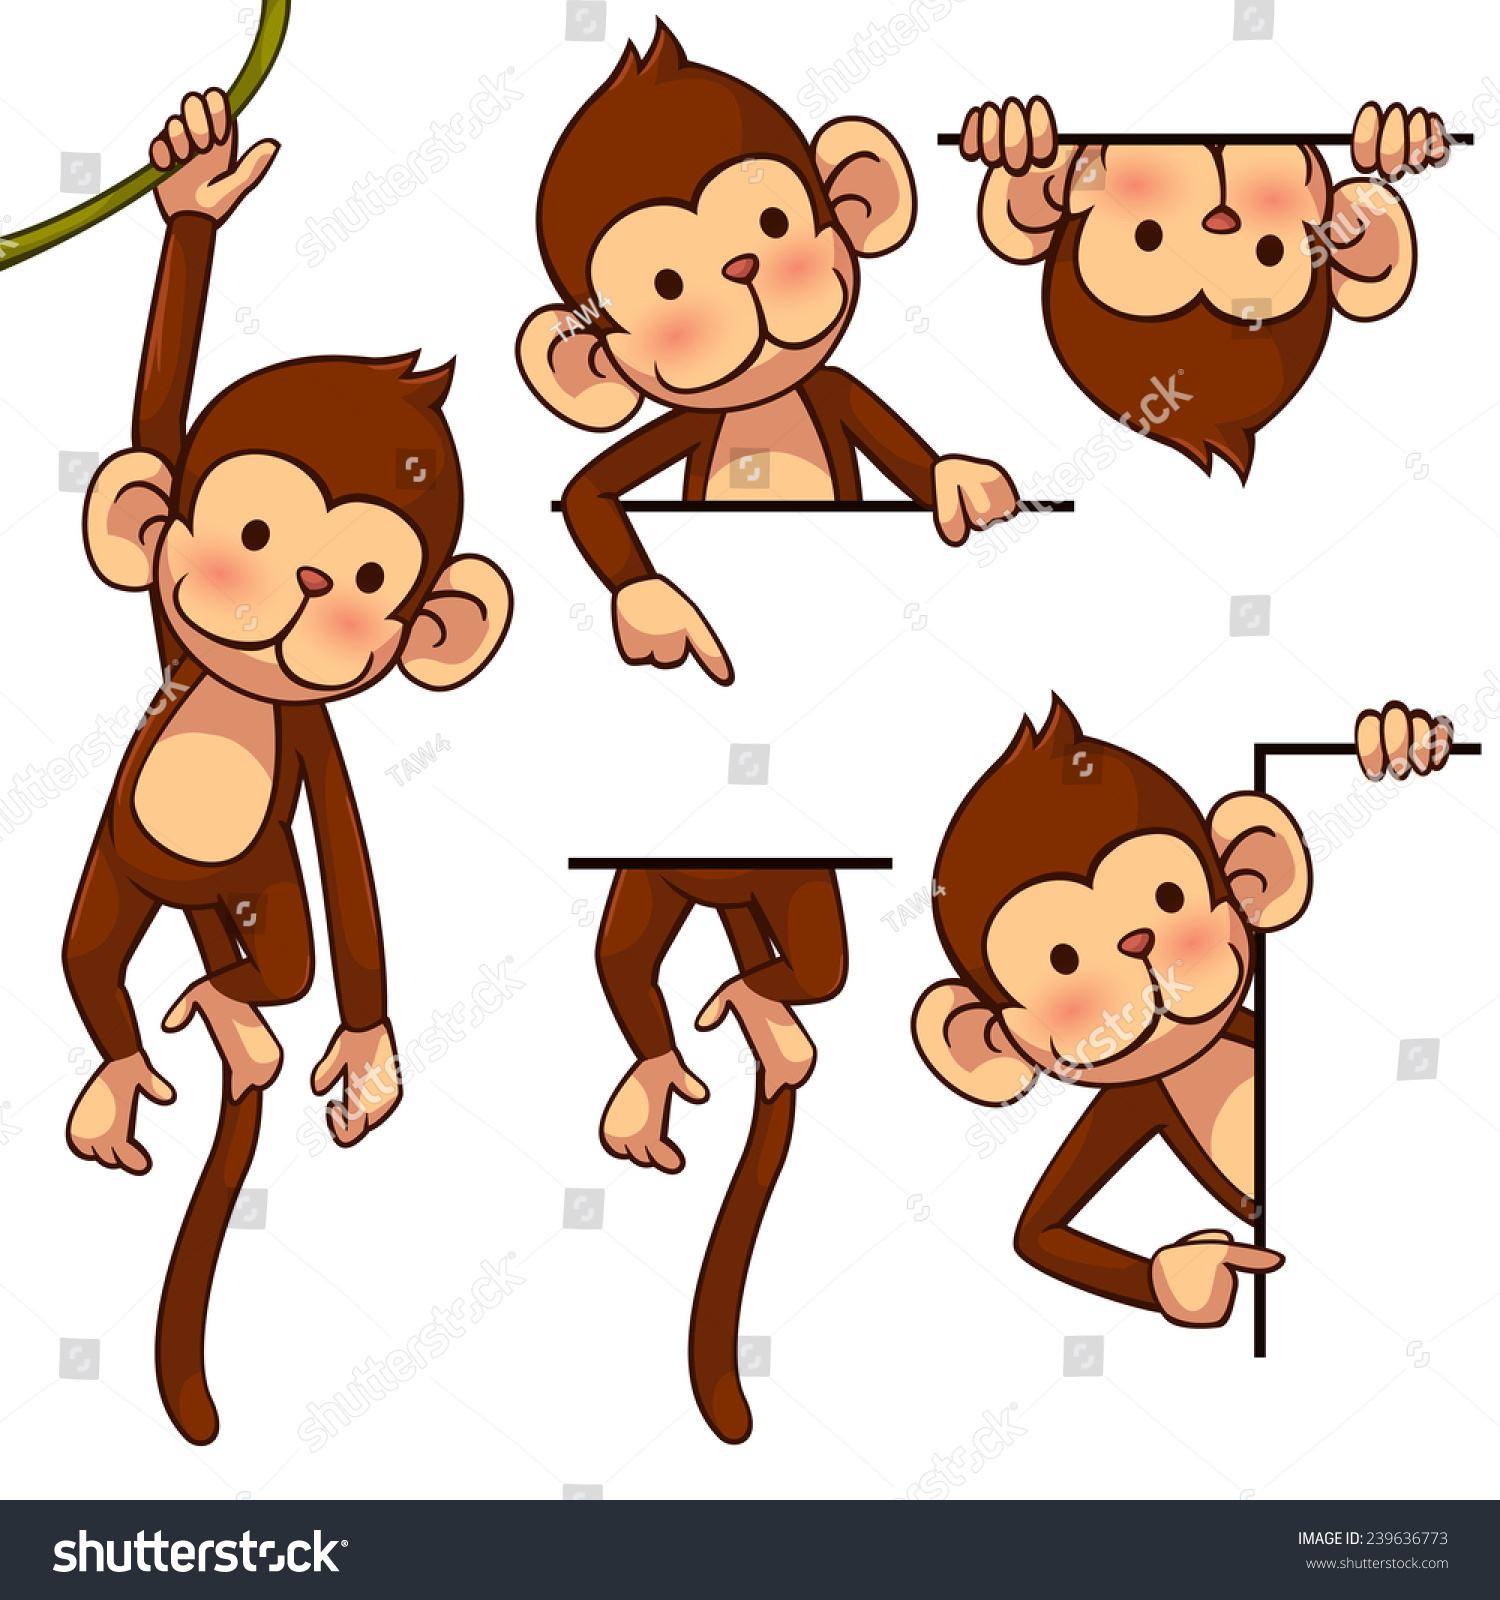 monkey illustrations clipart - photo #21